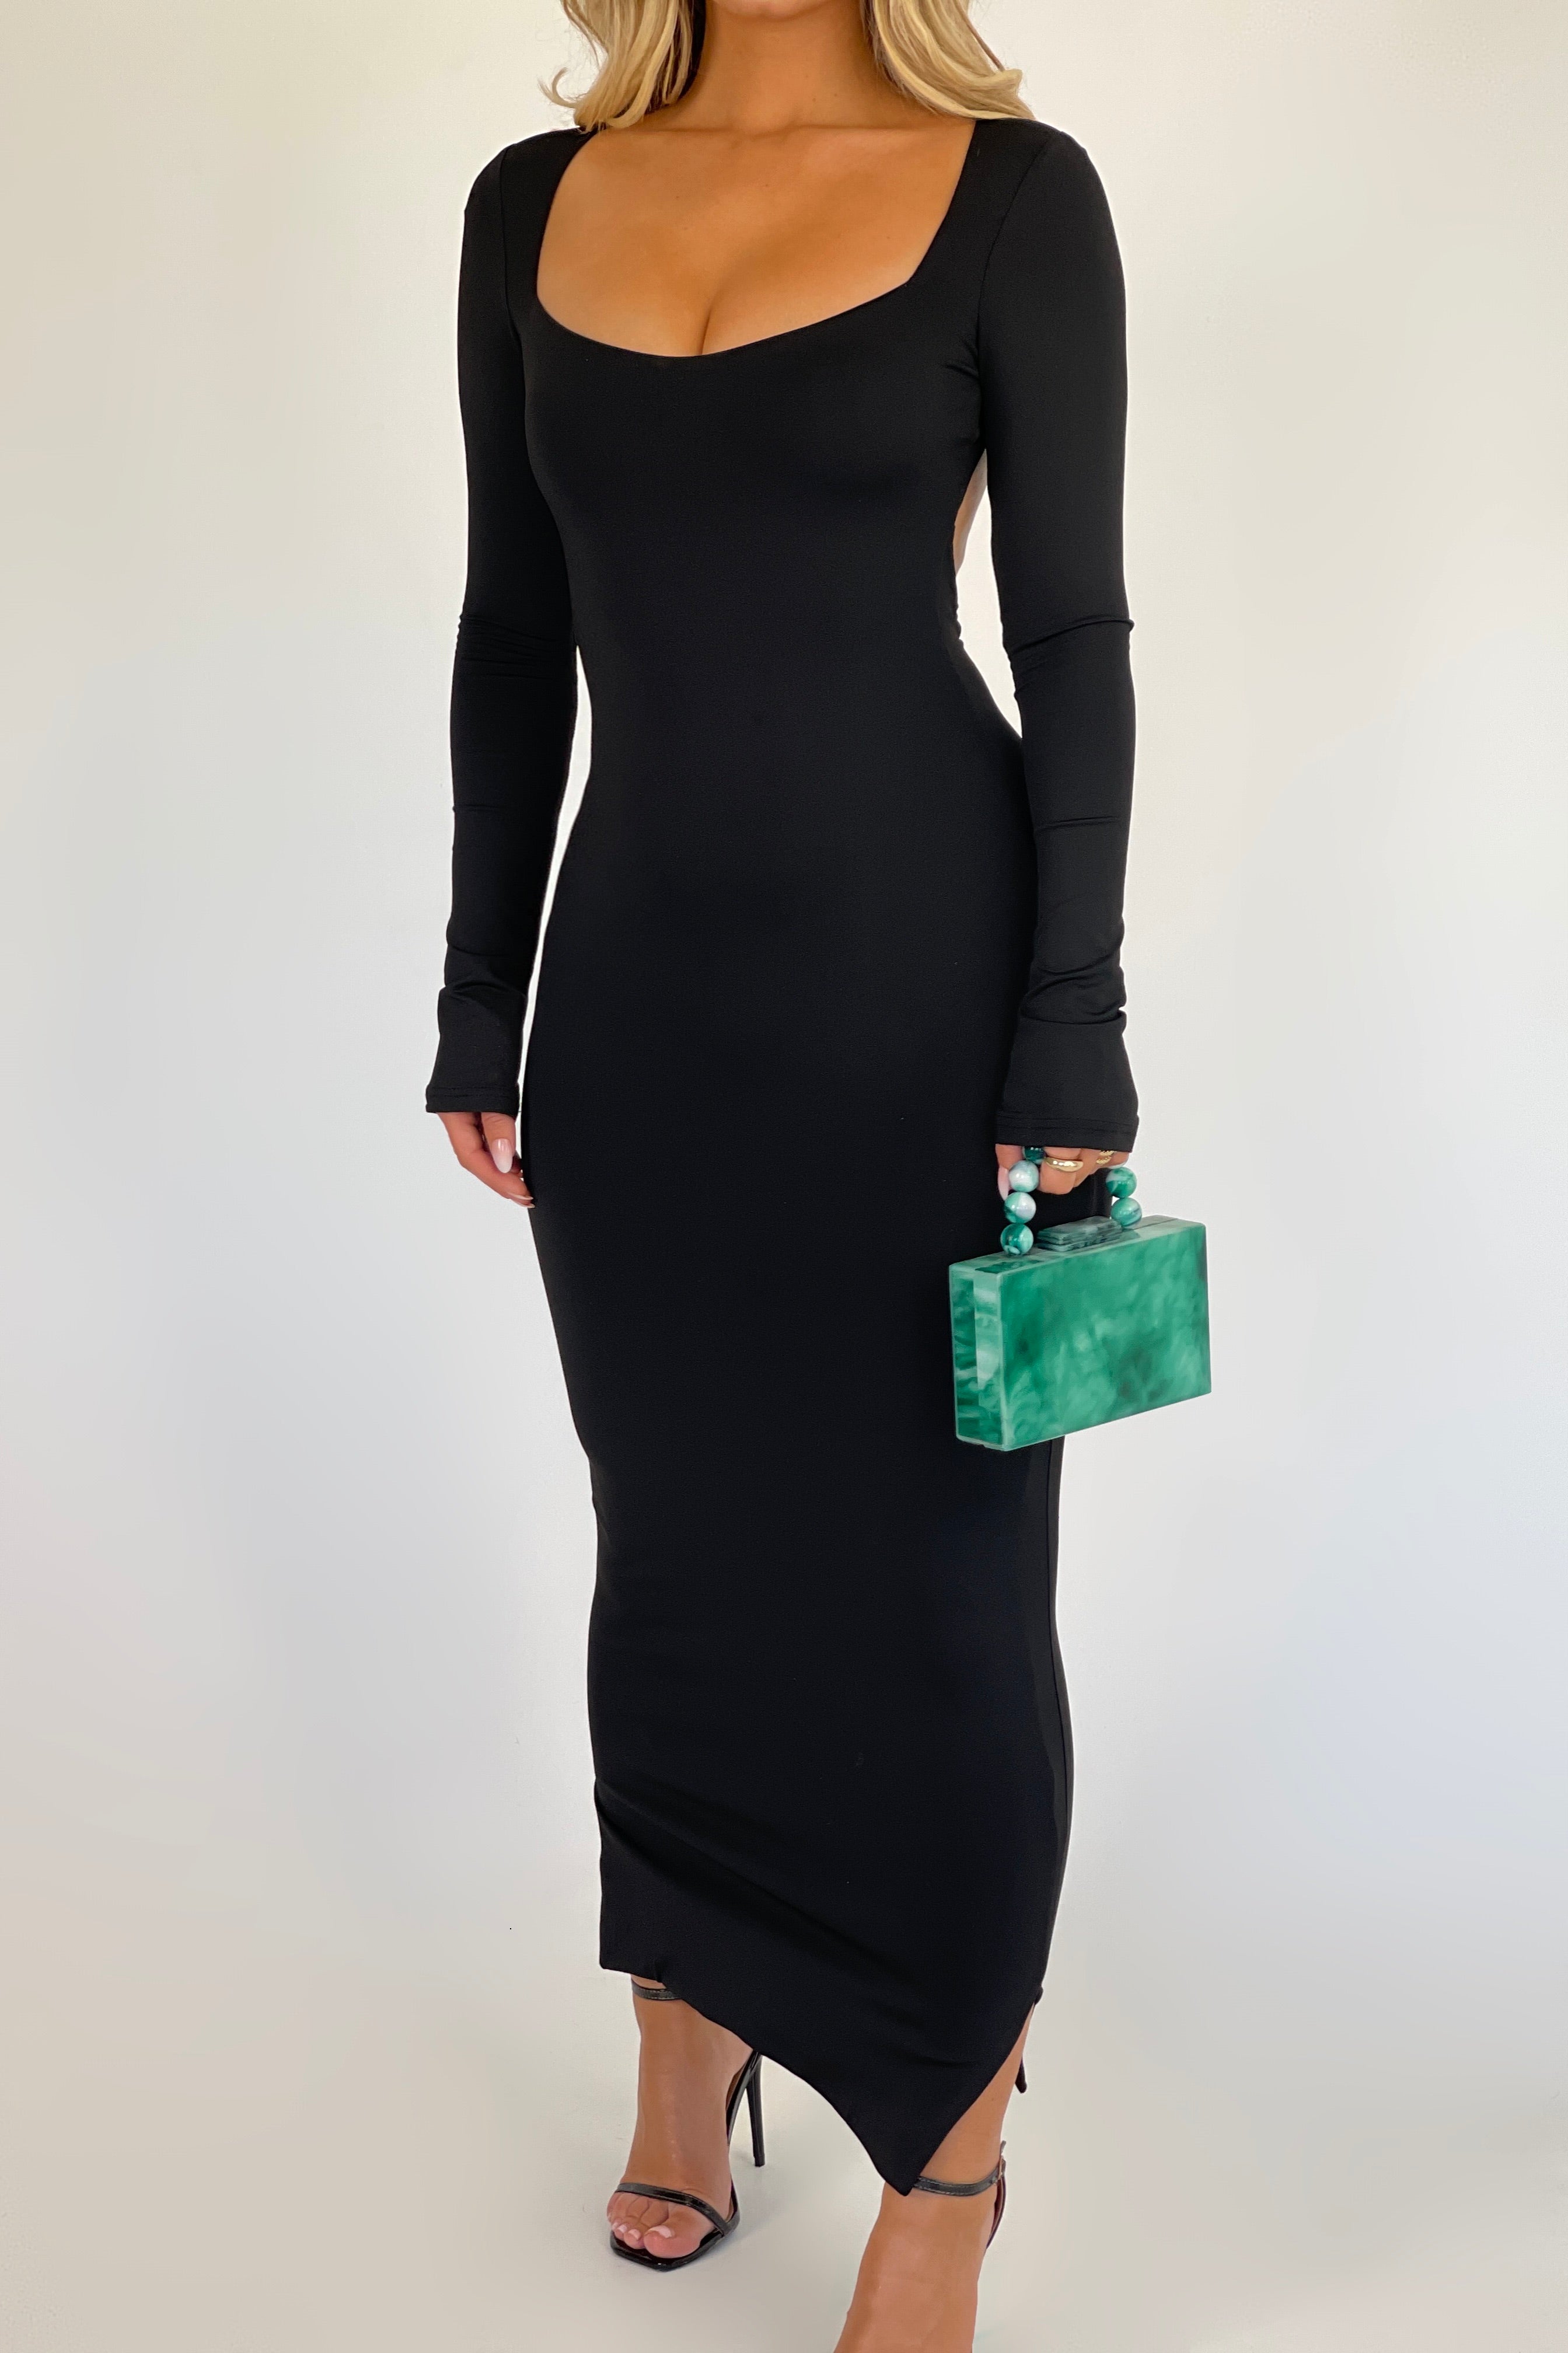 Melia Black Dress